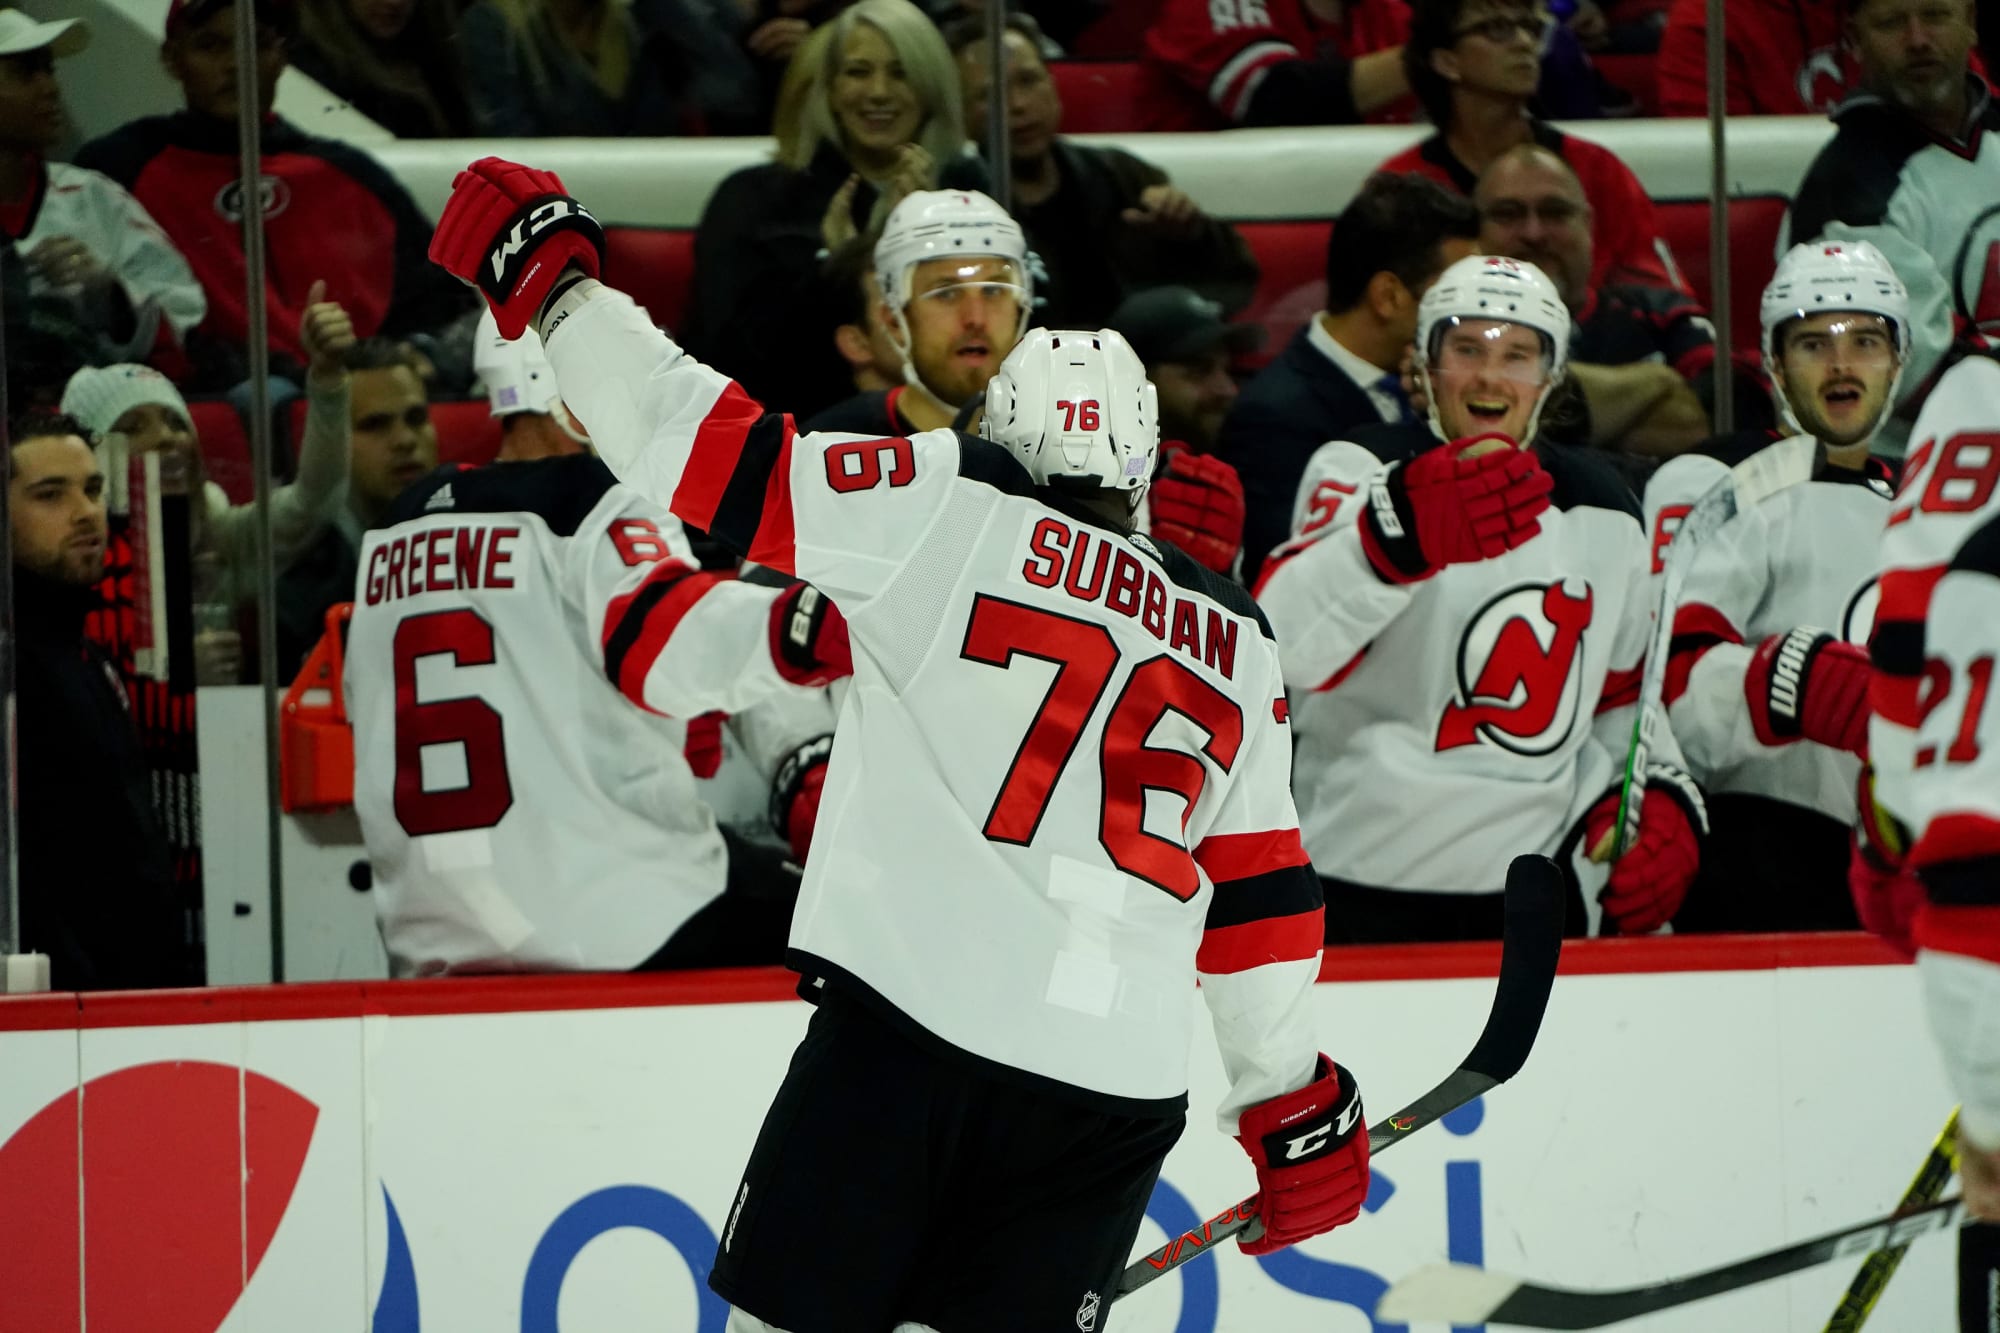 New Jersey Devils’ Win Could Change Team’s Fortunes - Flipboard